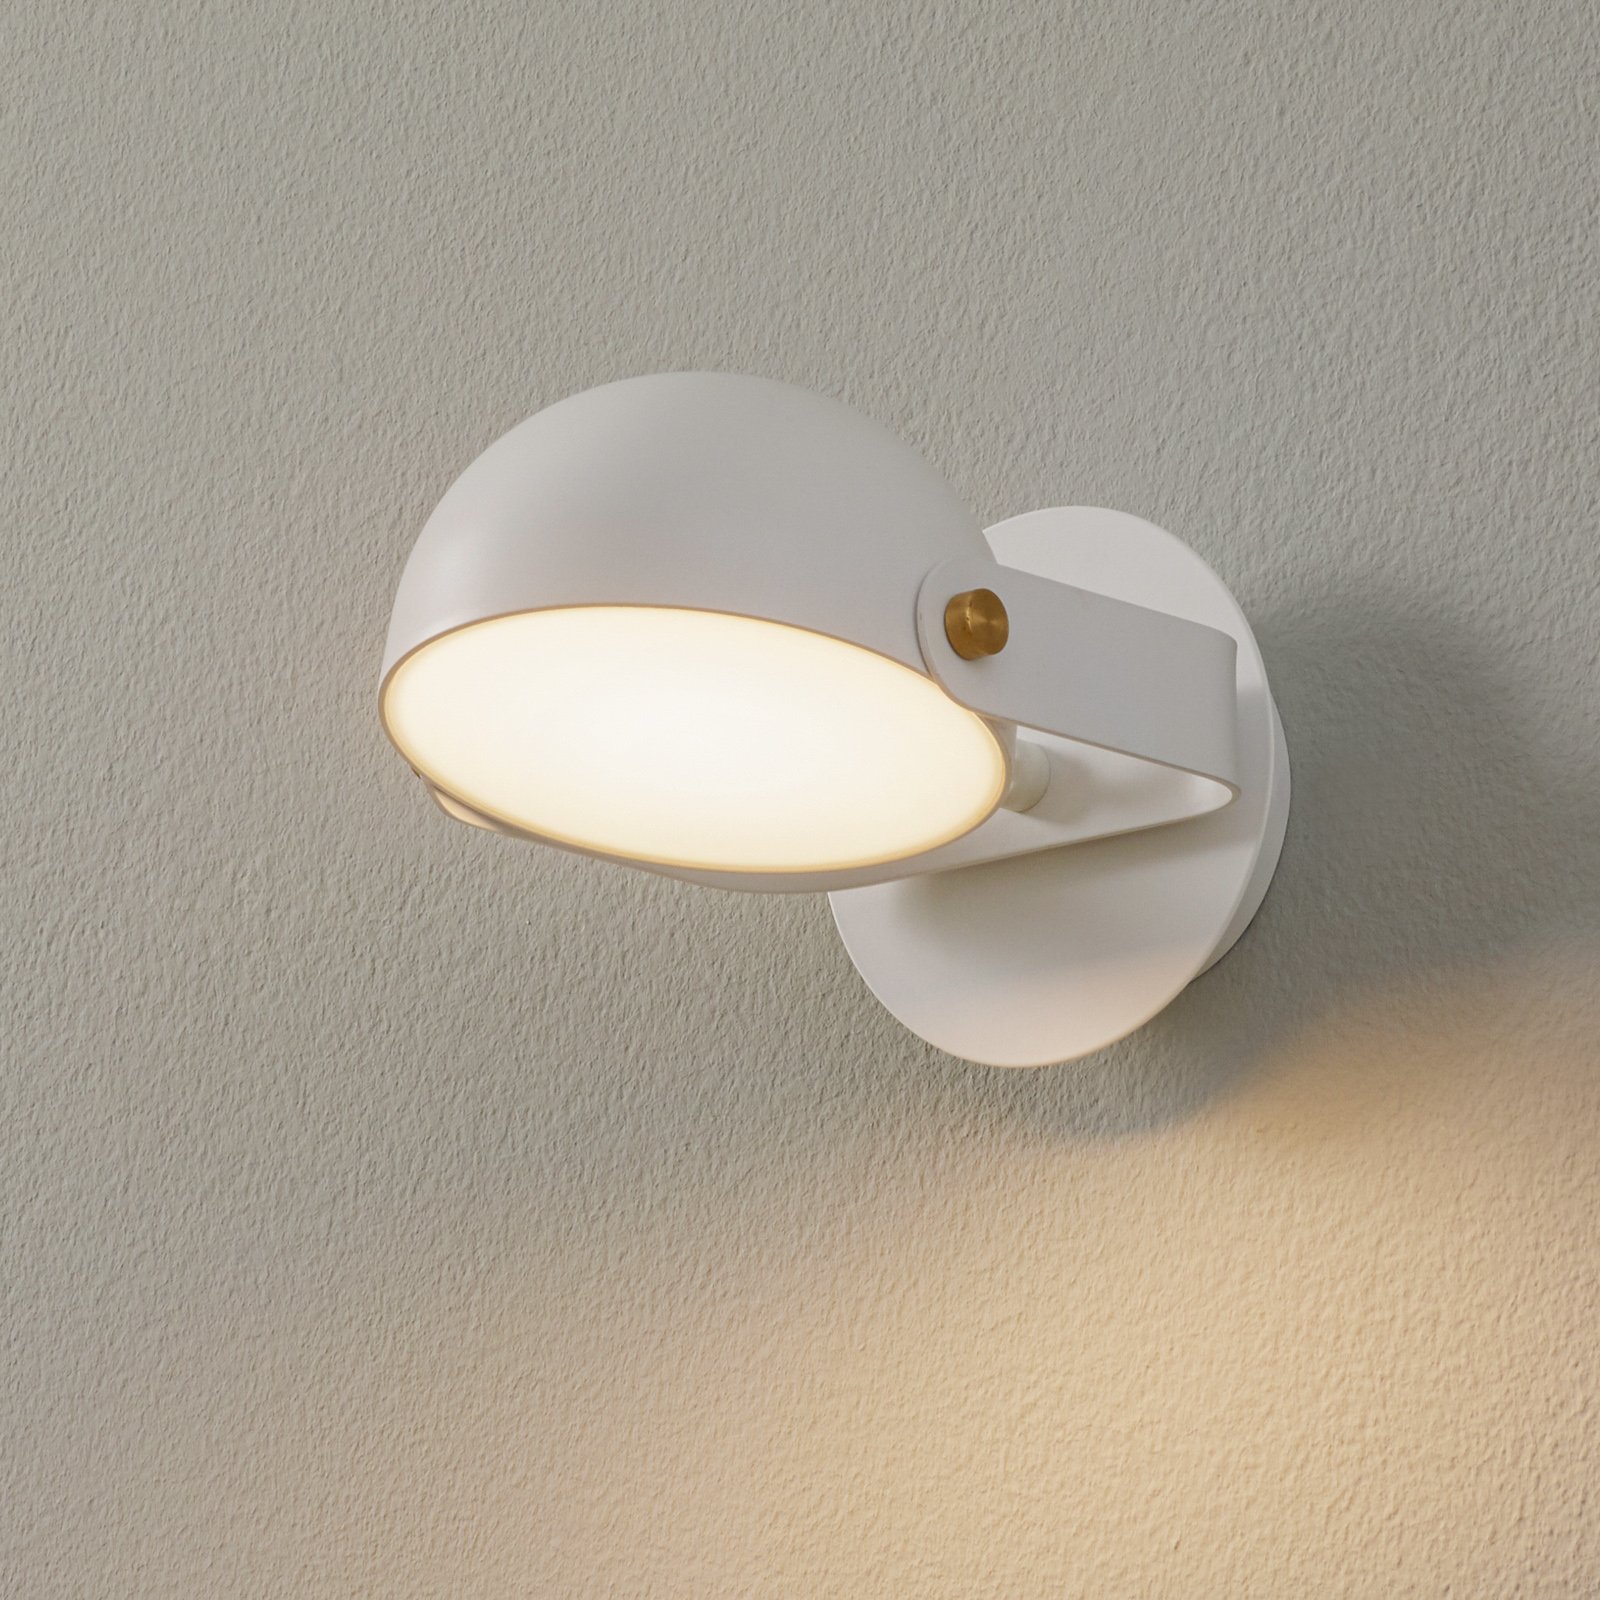 Hemi LED wall light, pivotable lampshade, white